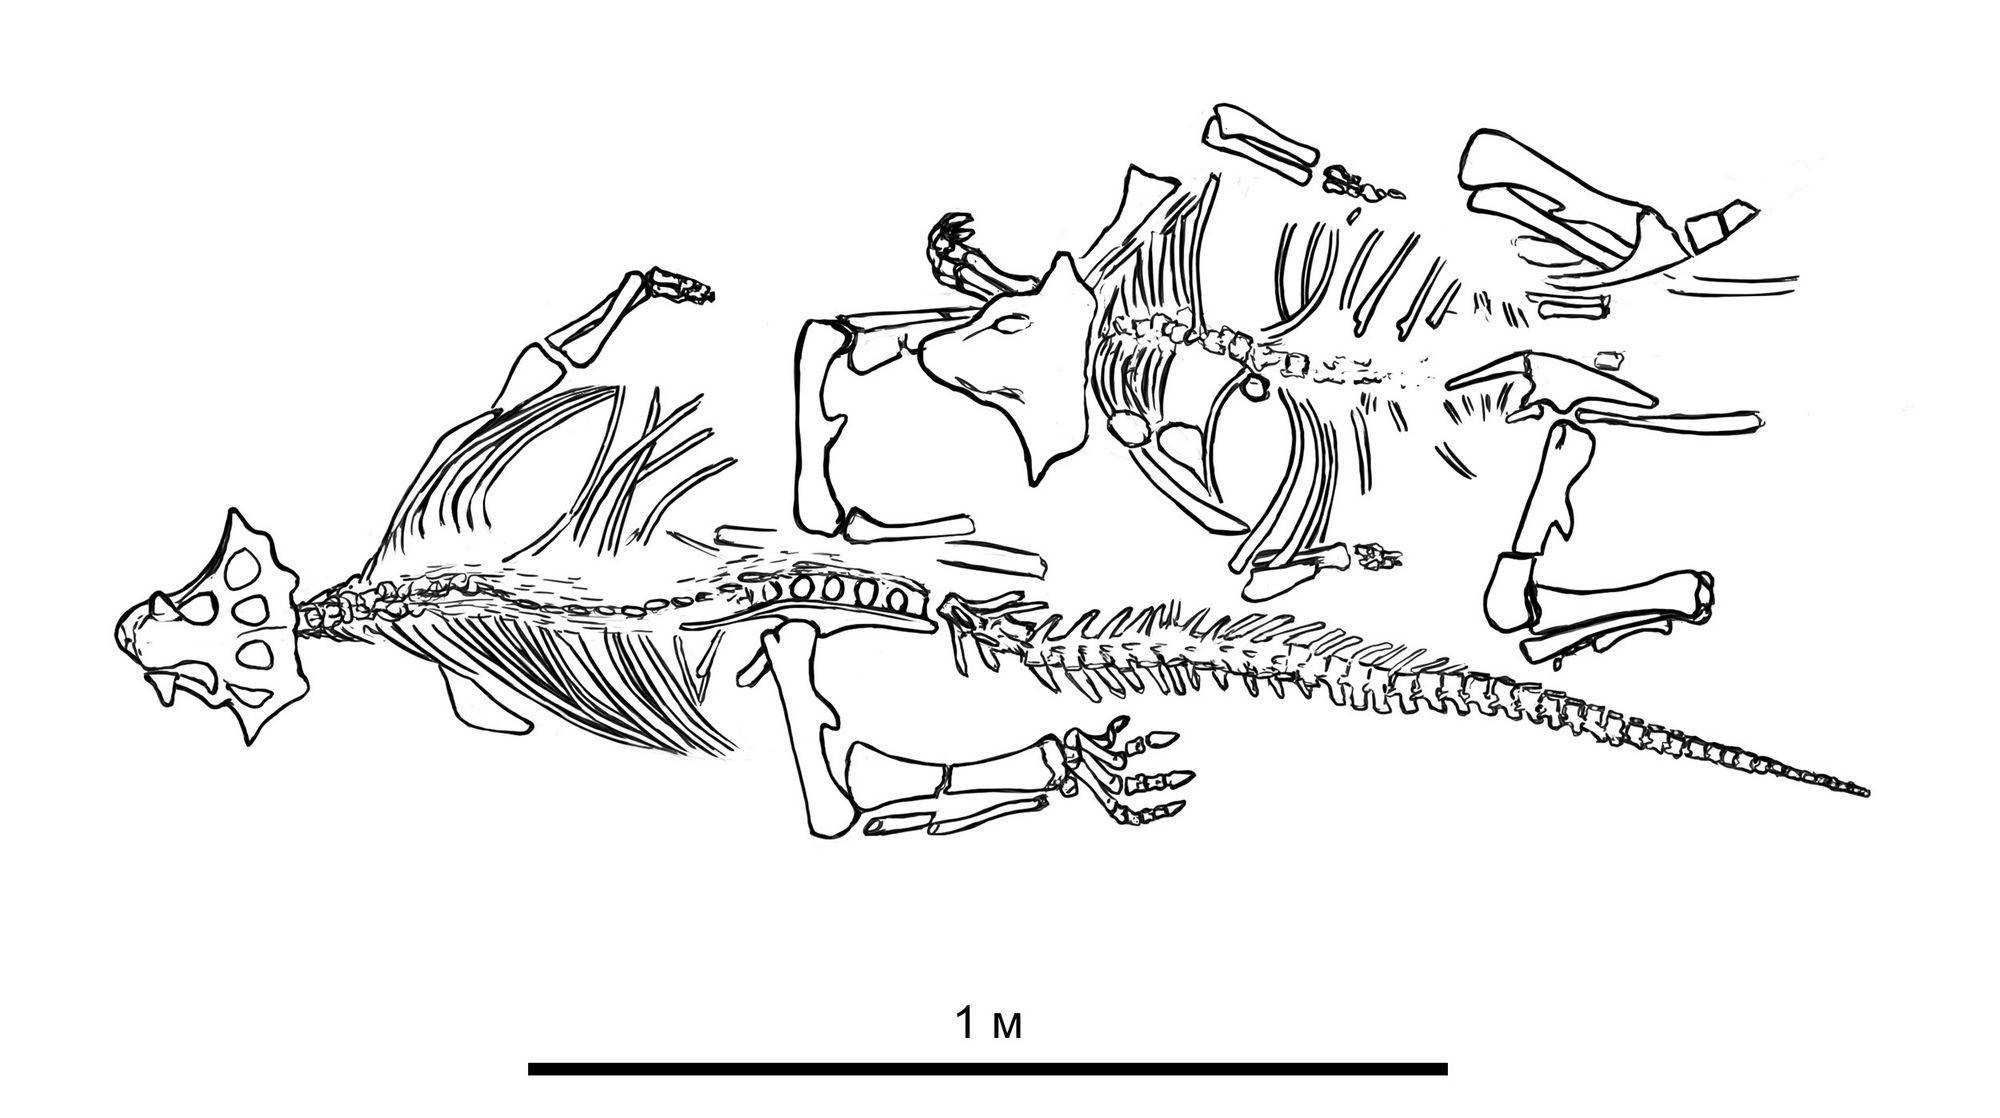 psittacosaurus sibiricus 1